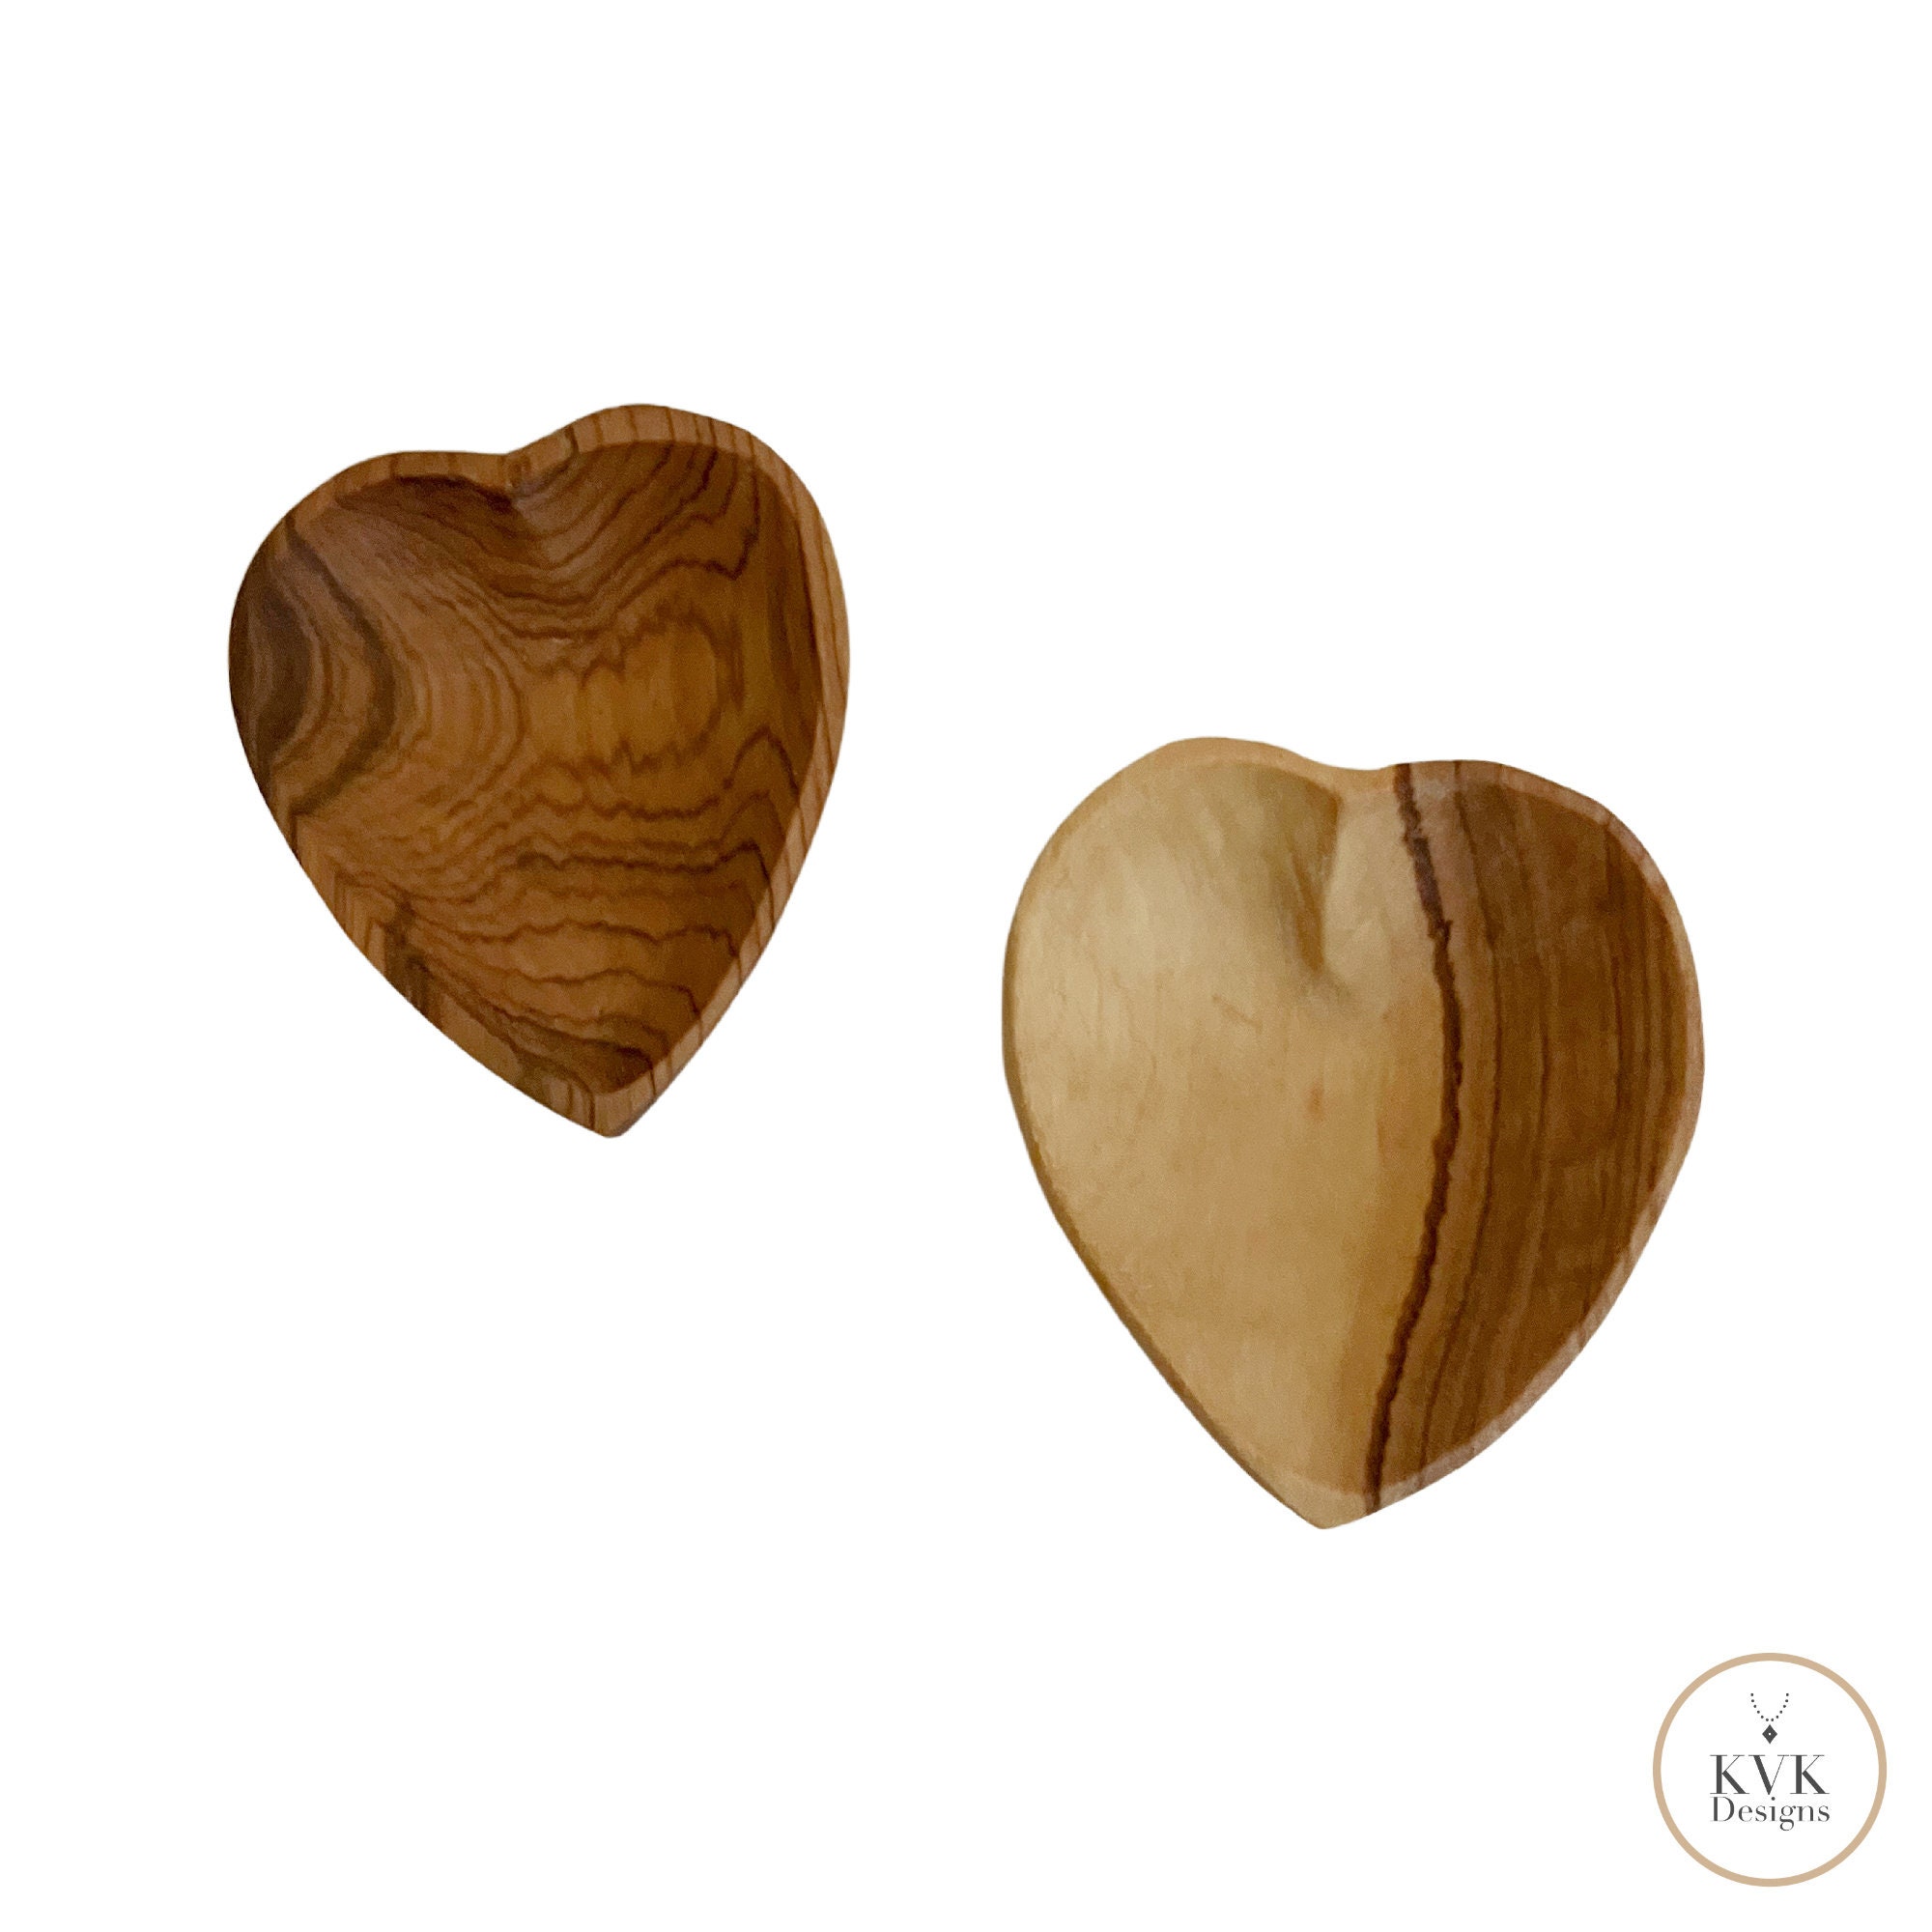 FUOYLOO 50 Pcs Wooden Heart Decor Wooden Hearts for Crafts Wood Hearts for  Crafts Wooden Heart Ornaments Wooden Crafts Wood Slices for Centerpieces